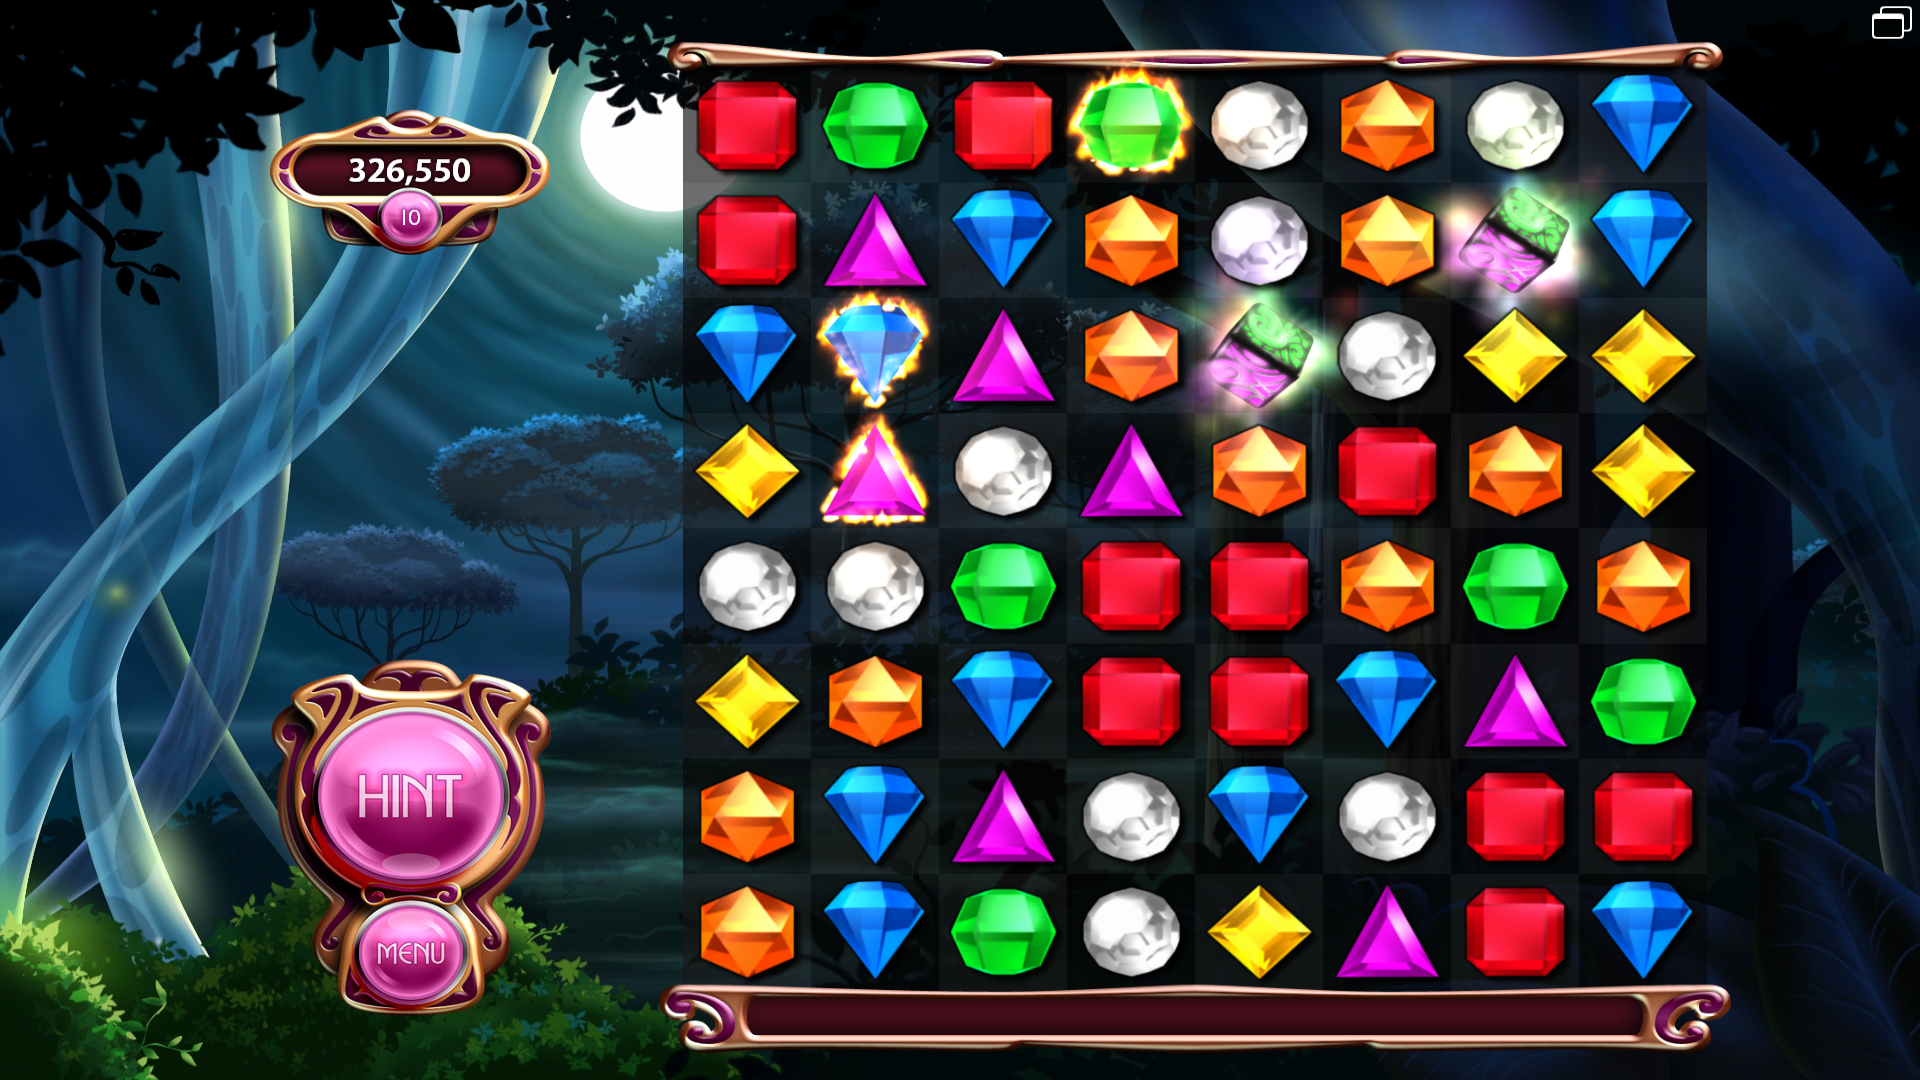 bejeweled 3 games online free